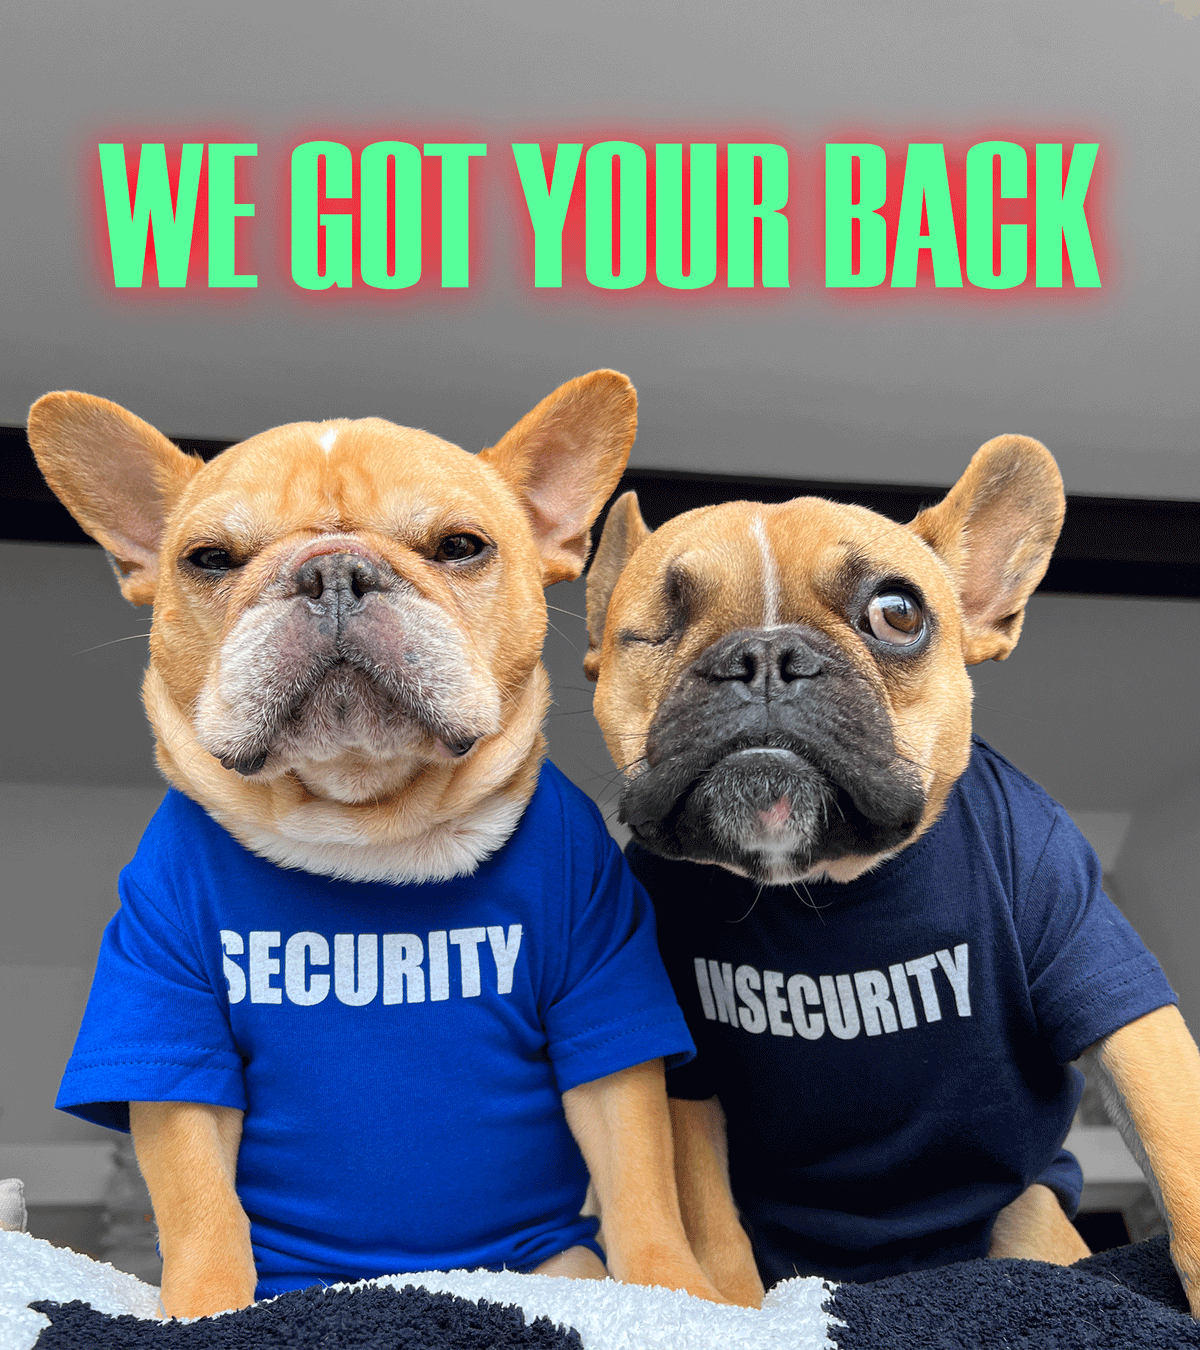 Security Dog Tee